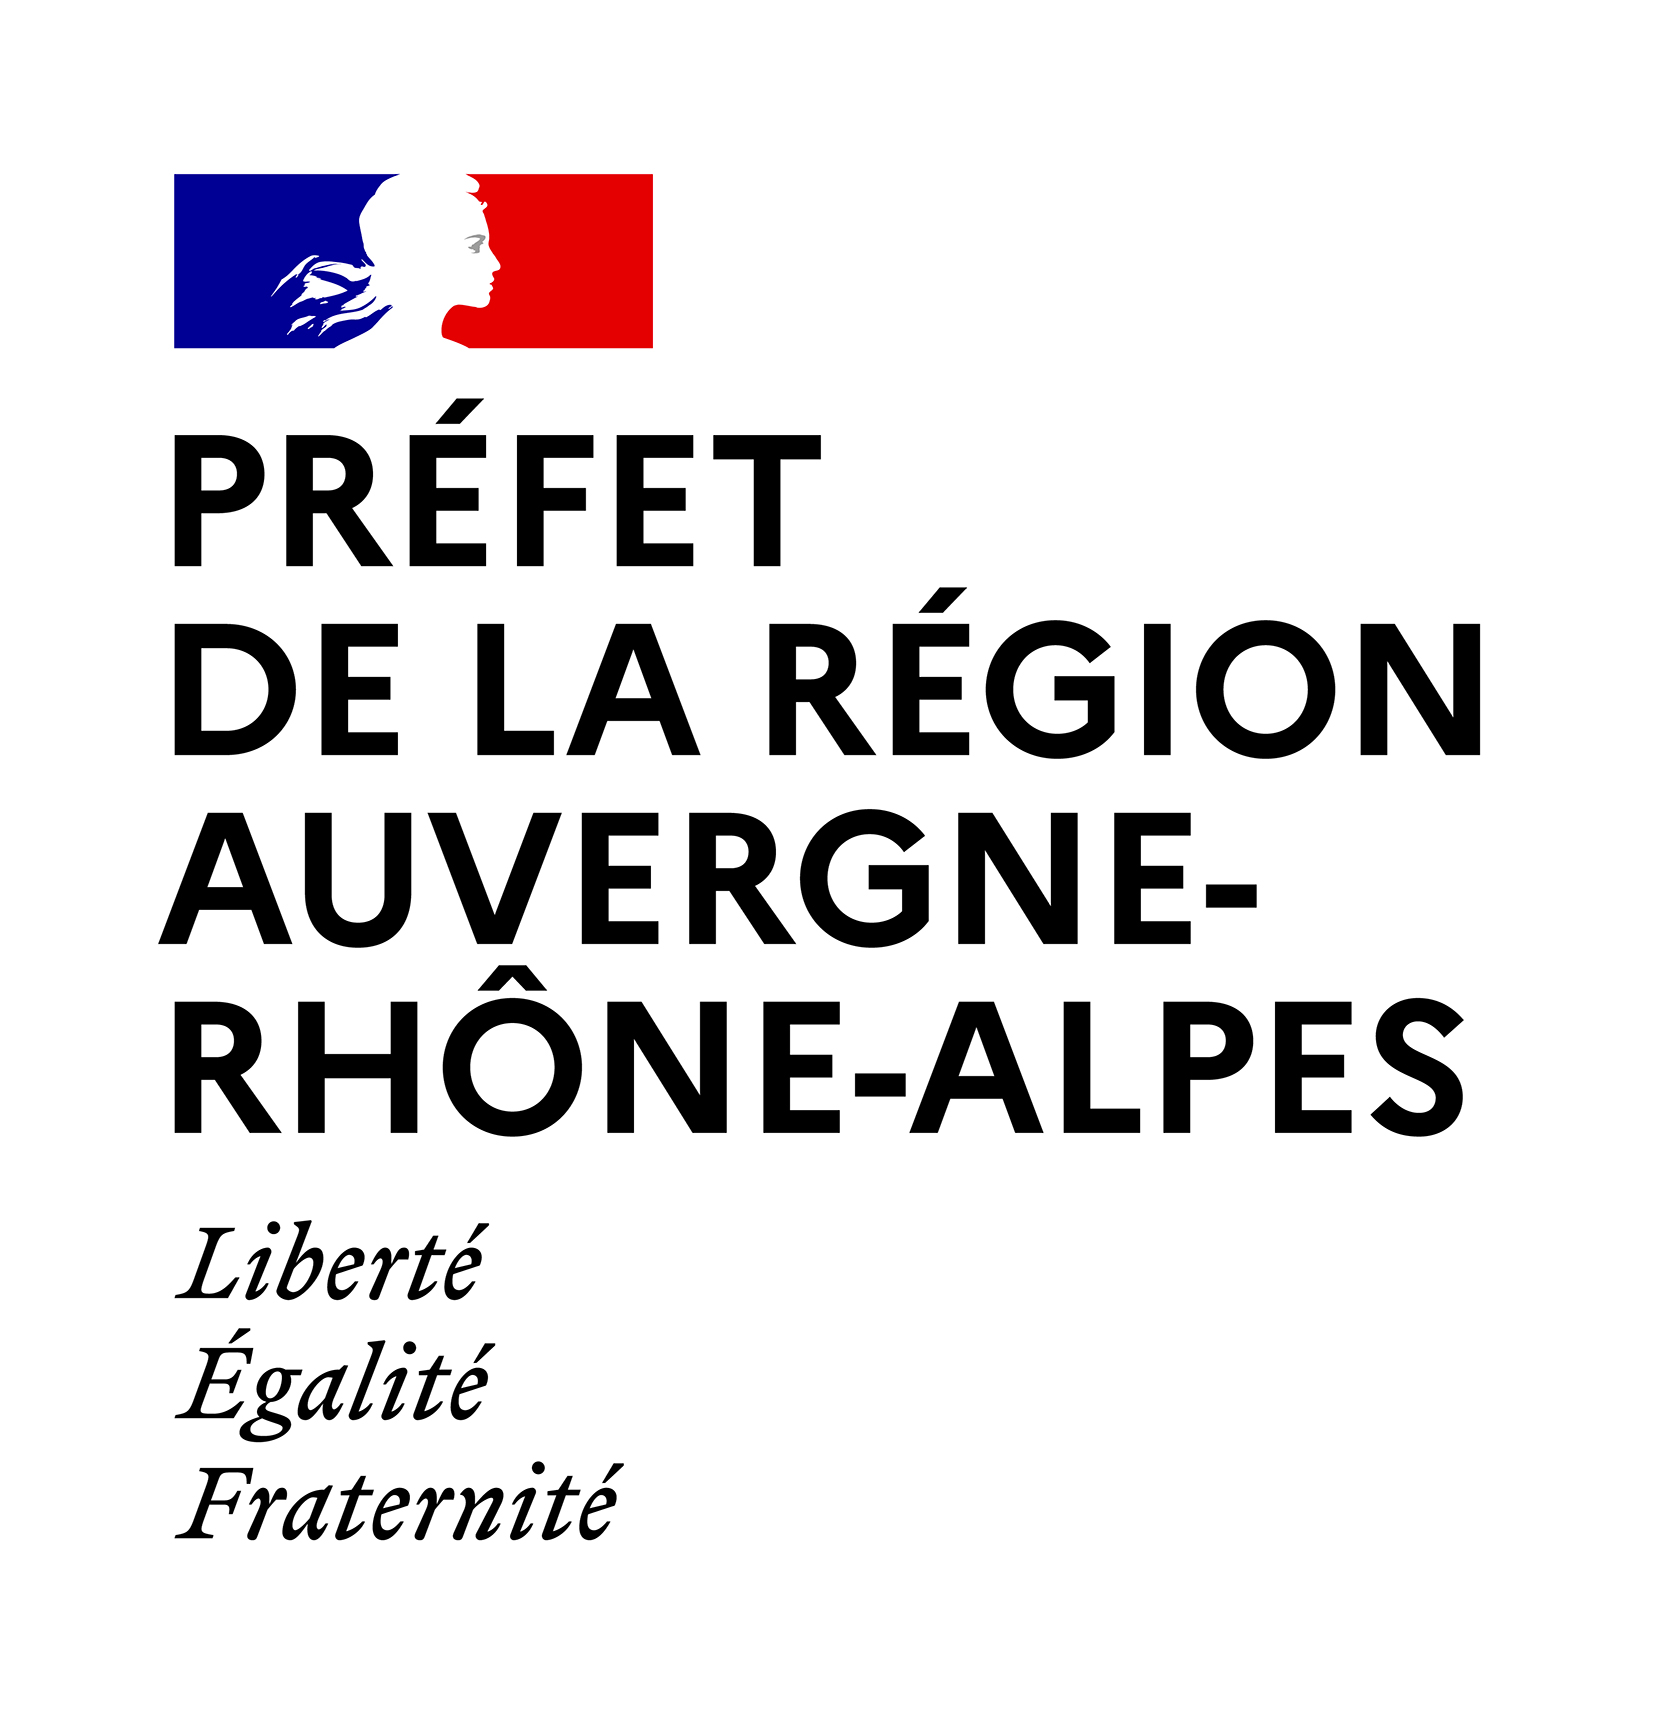 blocmarque_pref_region_auvergne_rhone_alpes_rvb_web14x14.jpg